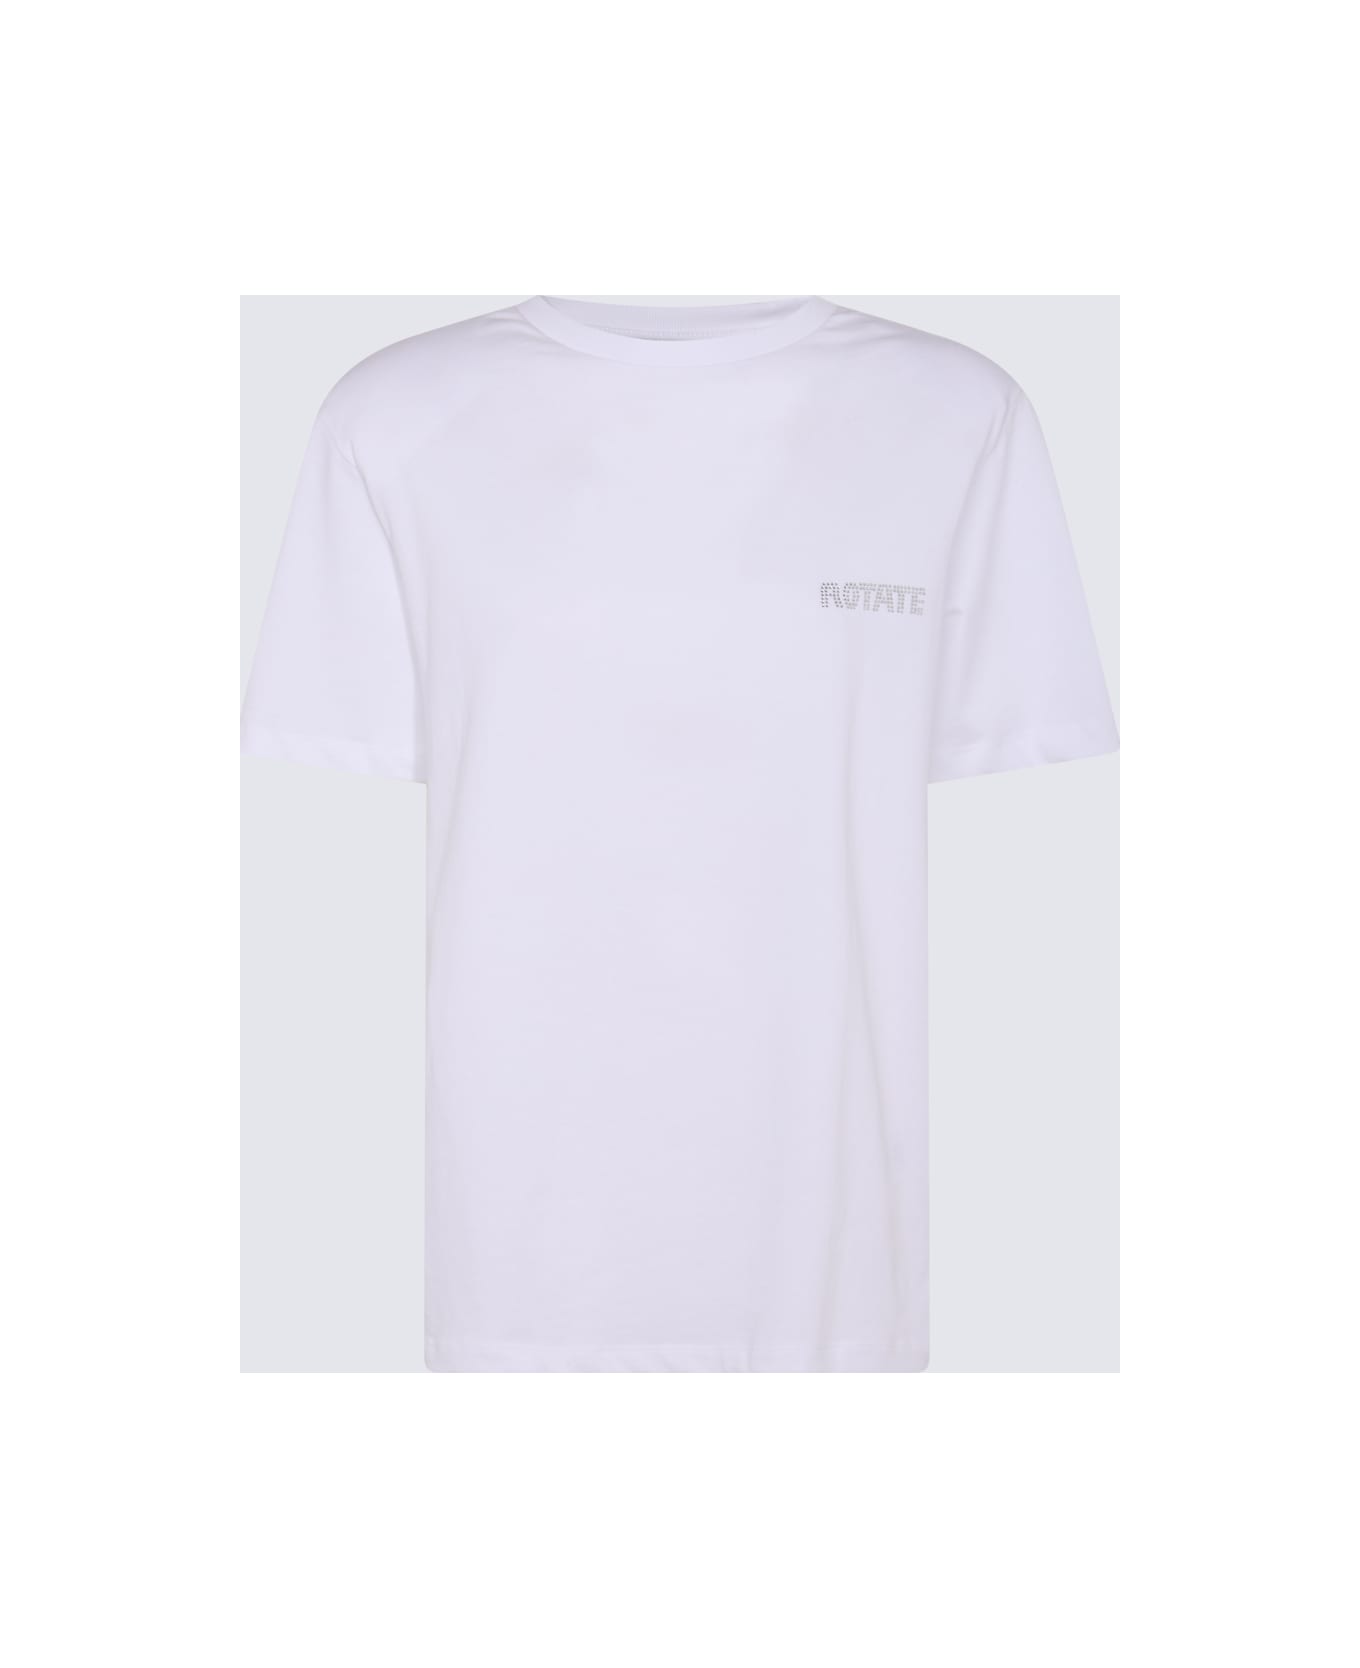 Rotate by Birger Christensen White Cotton T-shirt - White